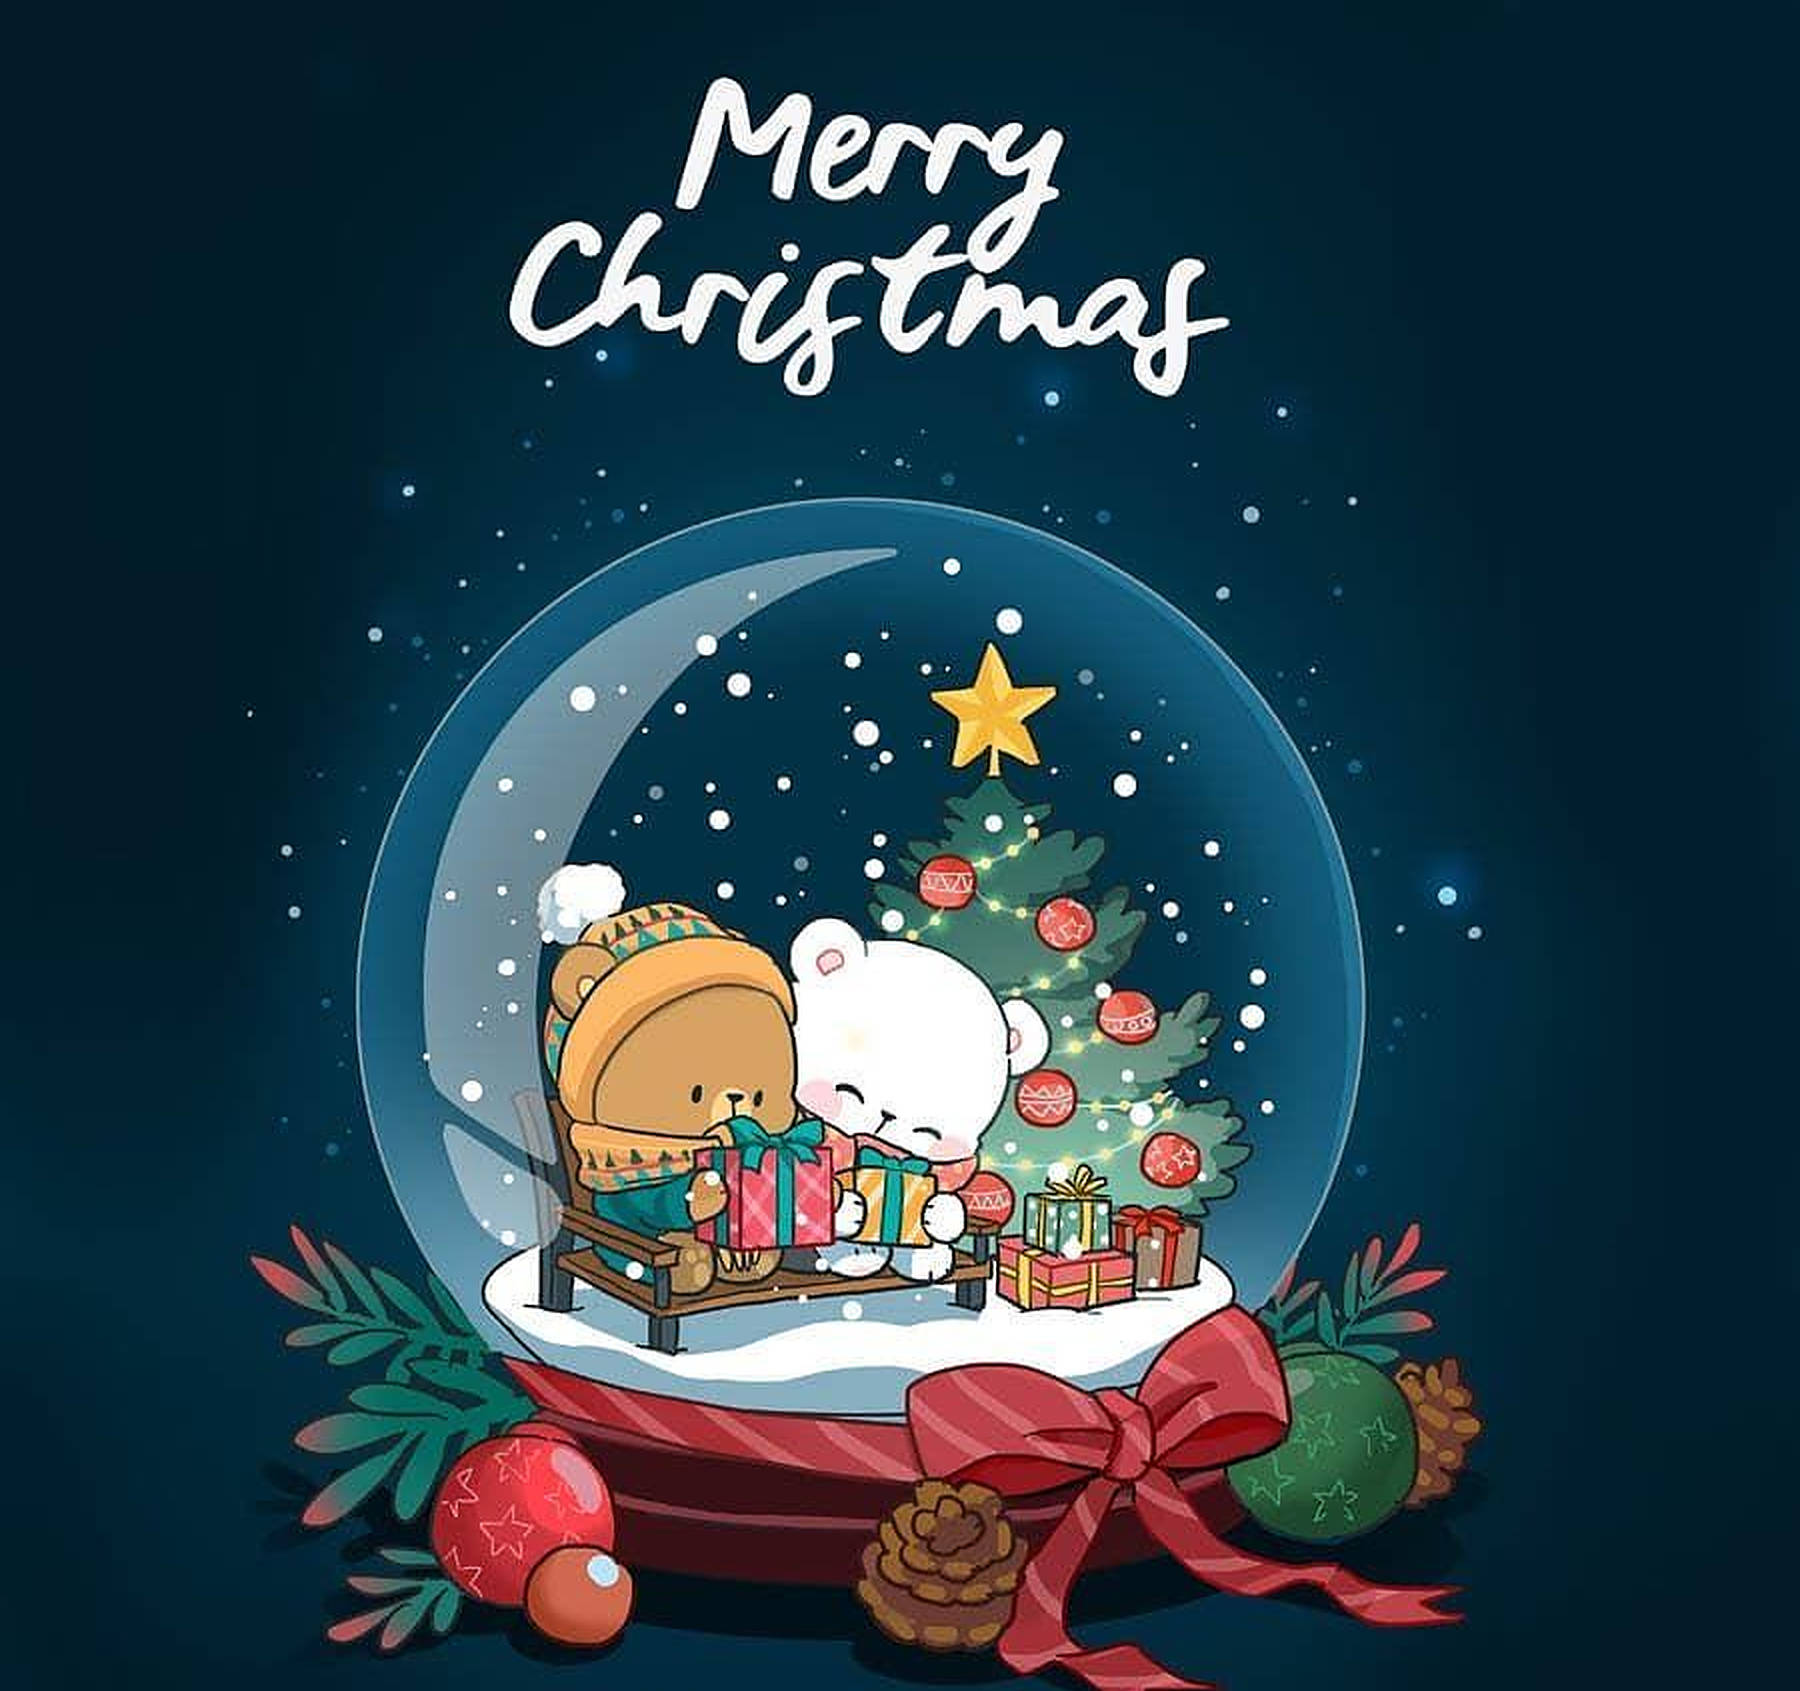 Free Merry Christmas Wallpaper Downloads, [200+] Merry Christmas Wallpapers  for FREE 